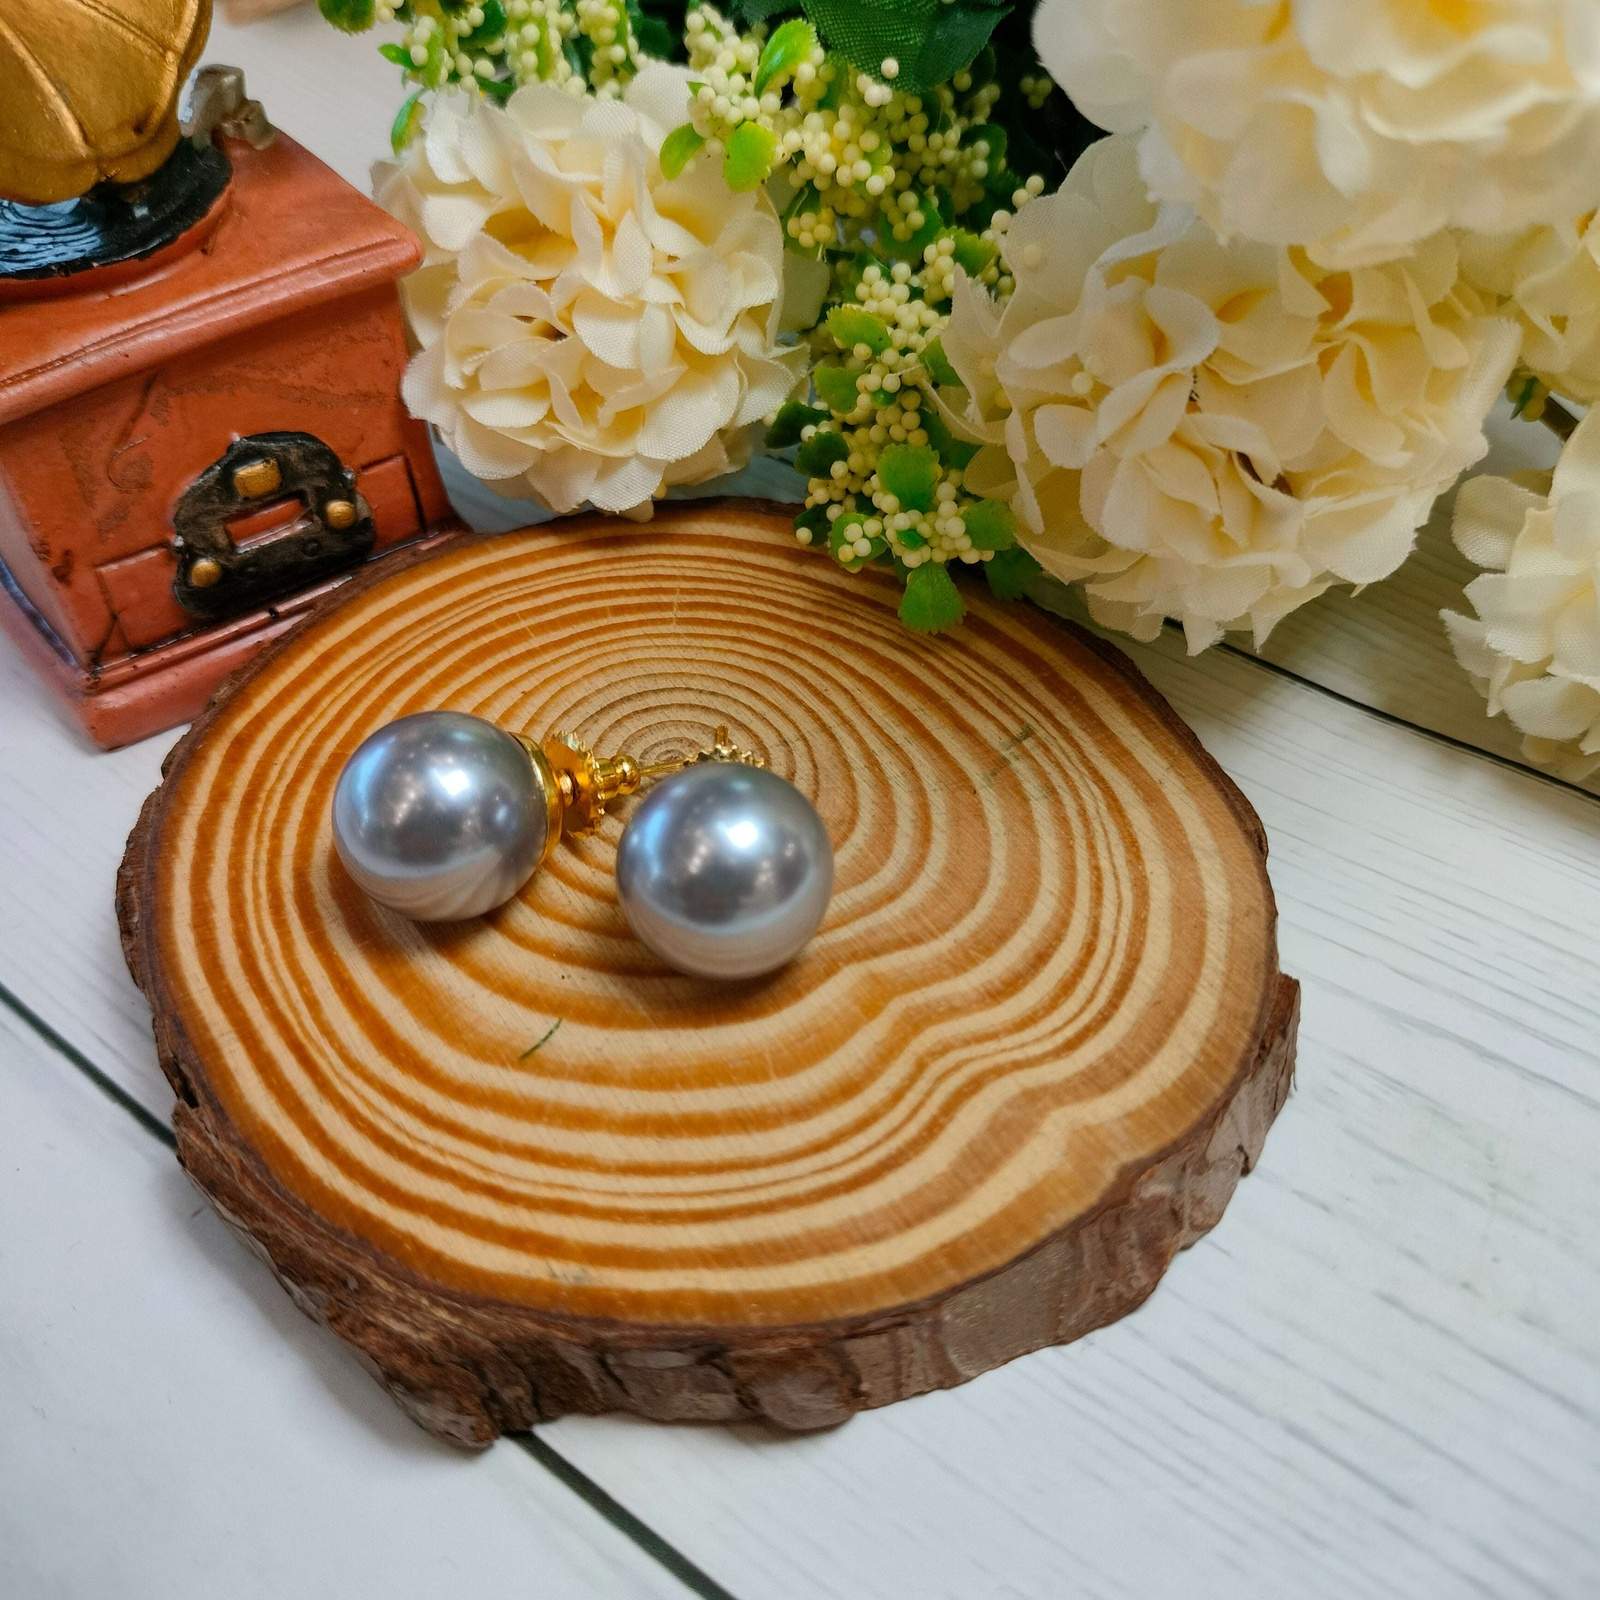 Layla Akira pearl studs velvet box by shweta